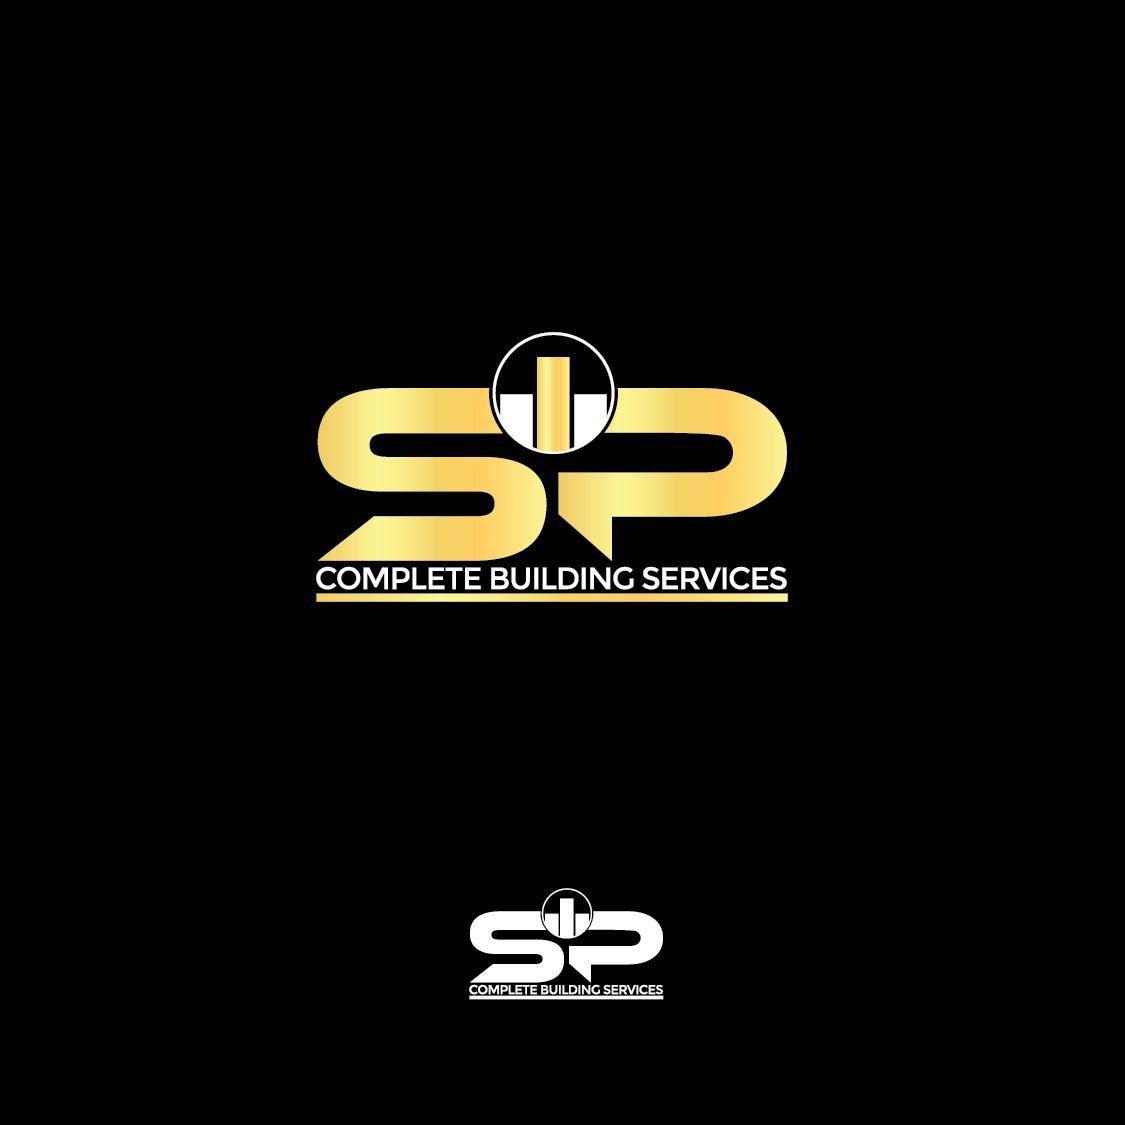 Sp Logo - It Company Logo Design for S.P Complete Building Services